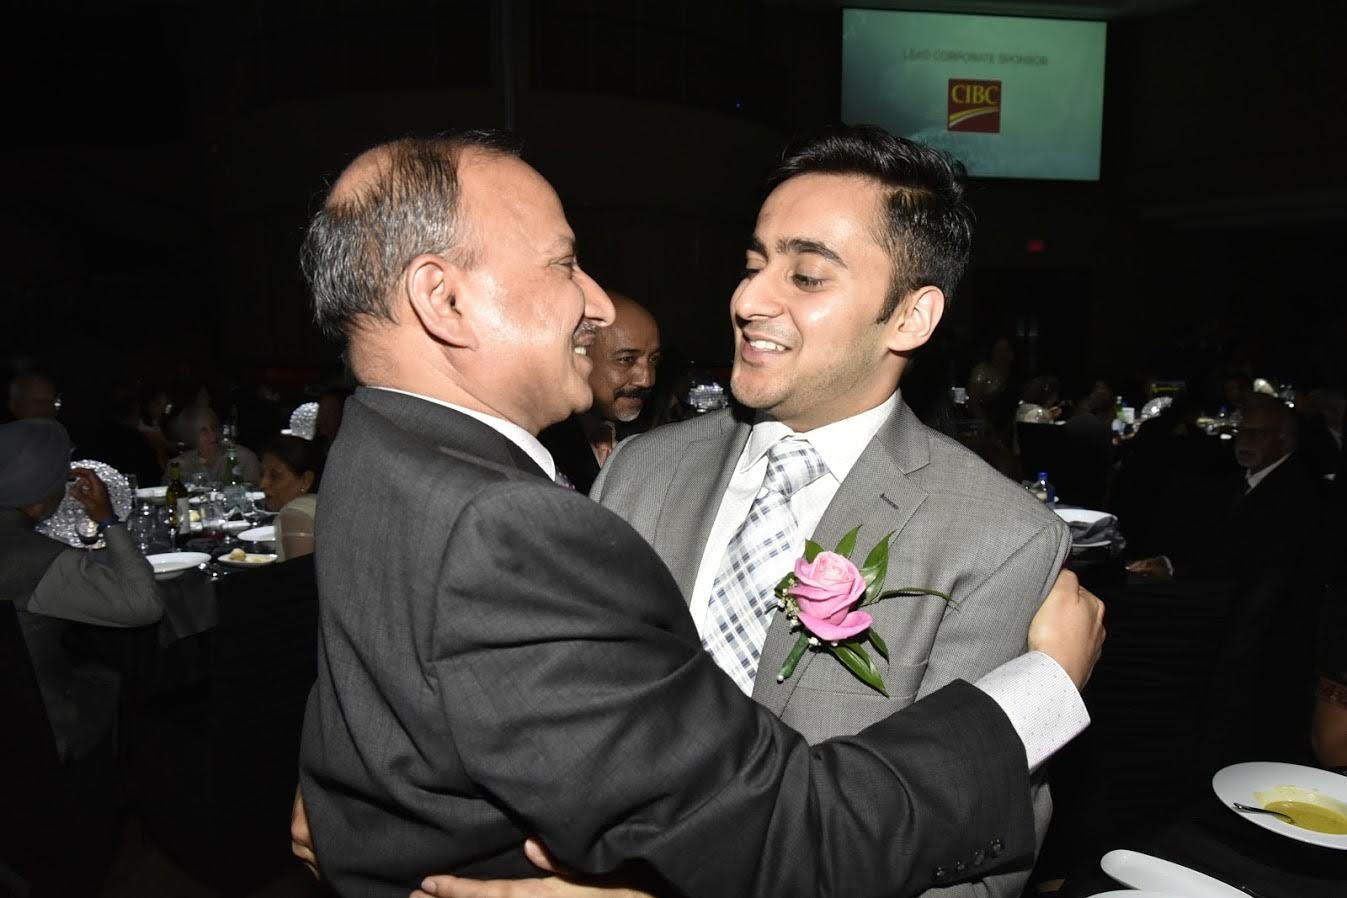 Abhishek Jain gets a hug from his father D.P. Jain on winning the ICCC award.